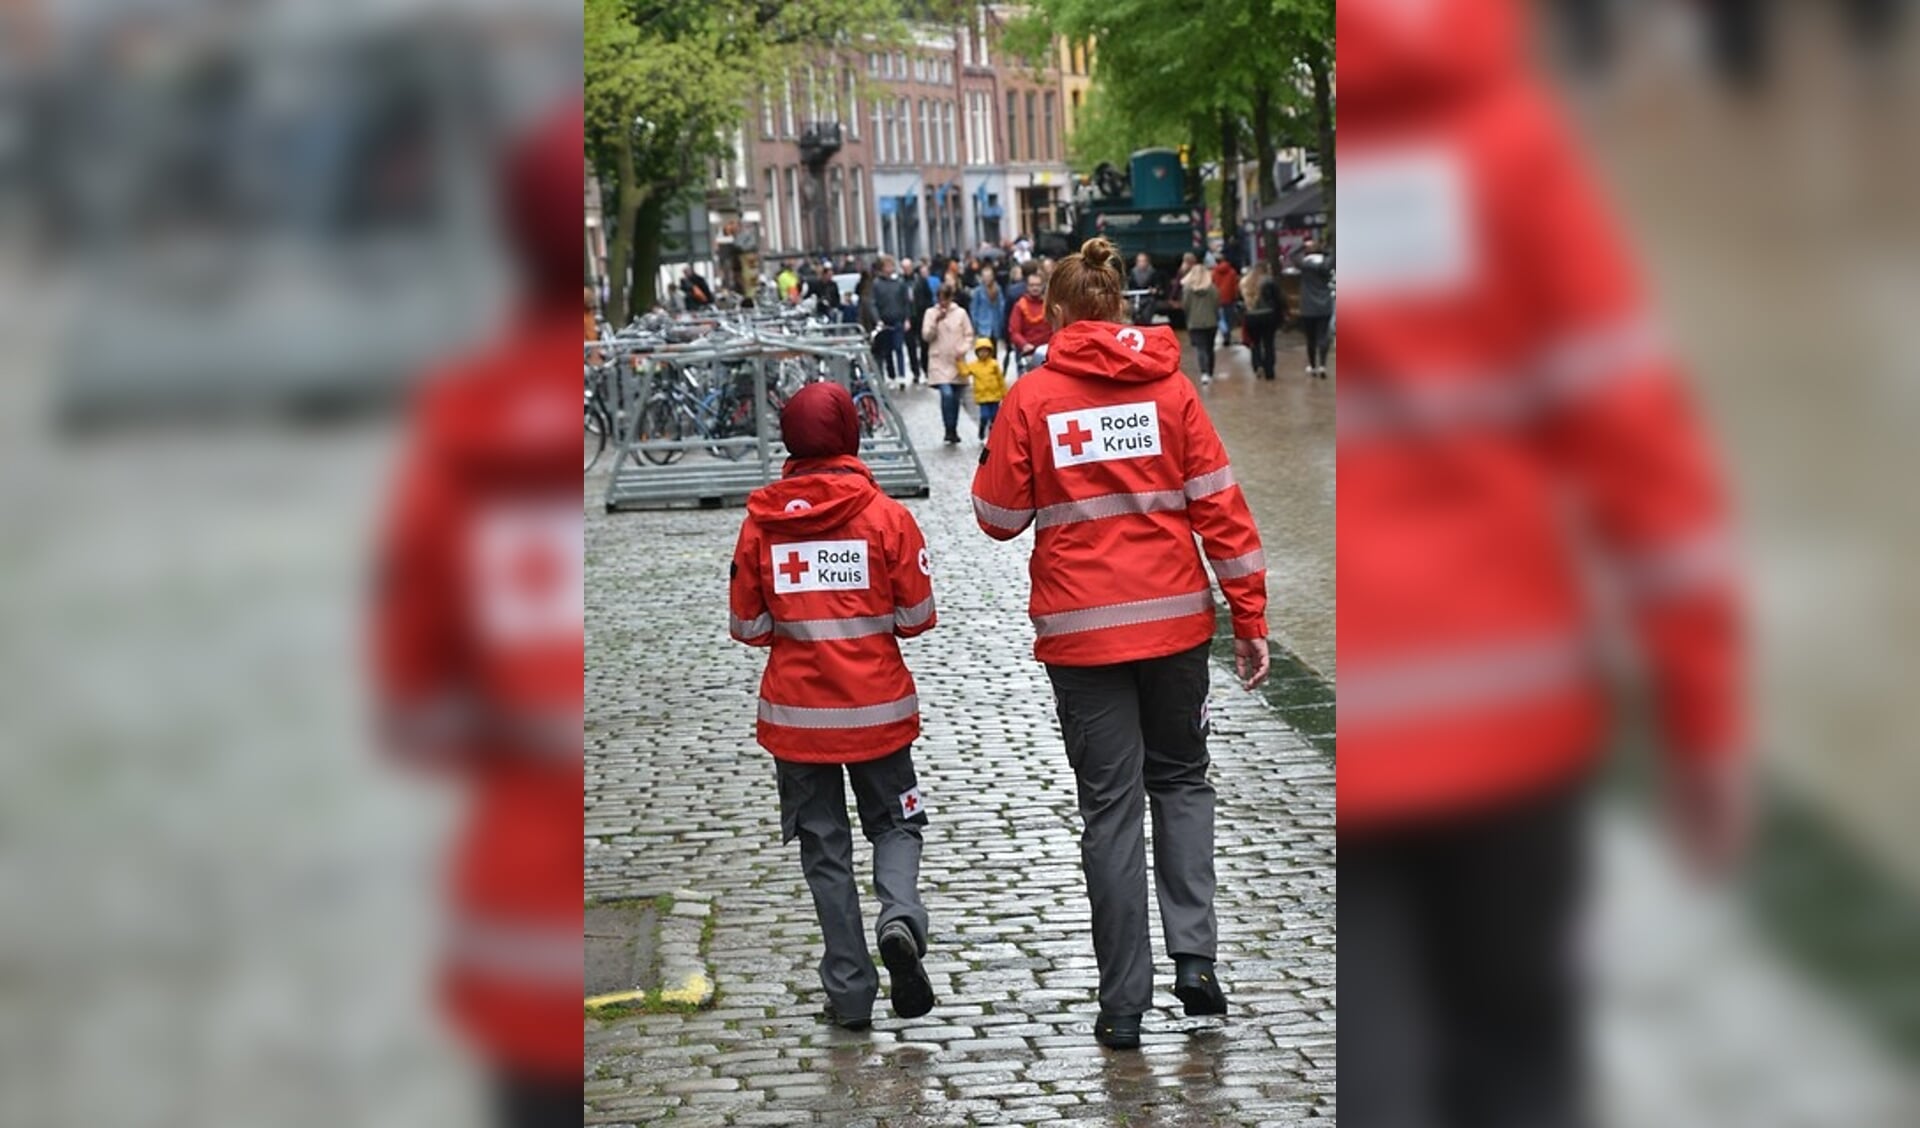 Afdeling Rode kruis Uitgeest en IJmond gaan samen verder